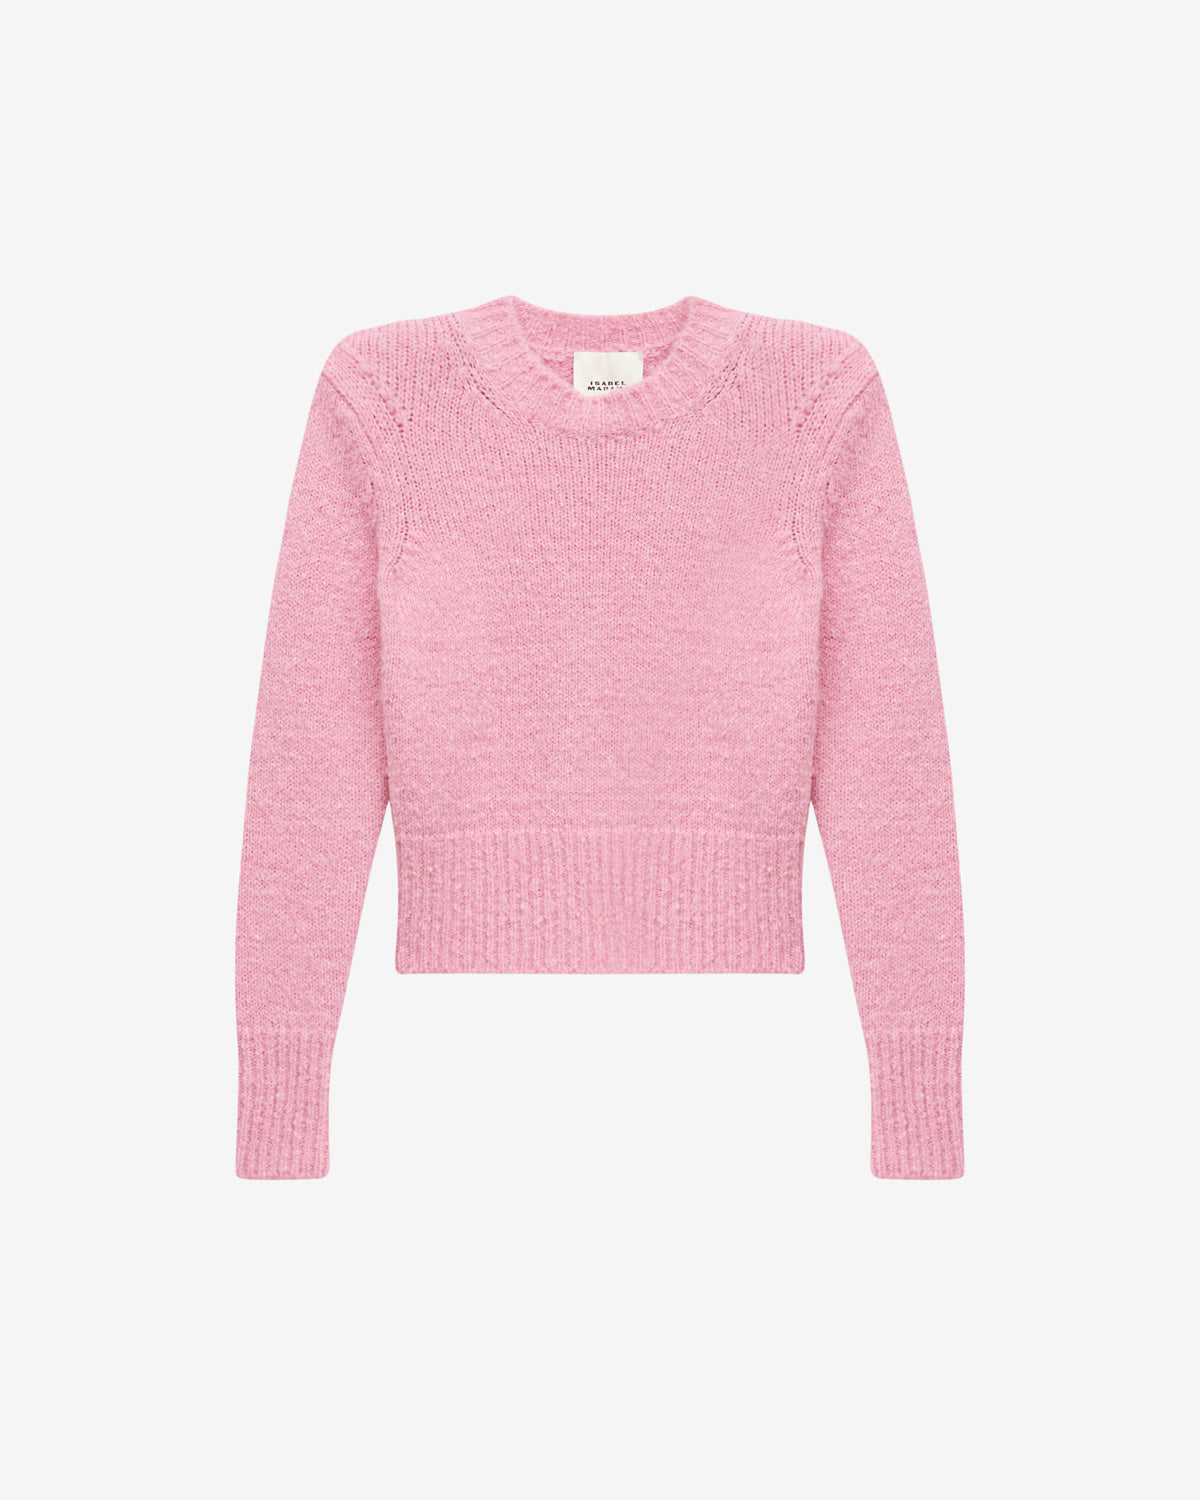 Kalo セーター Woman Light pink 1